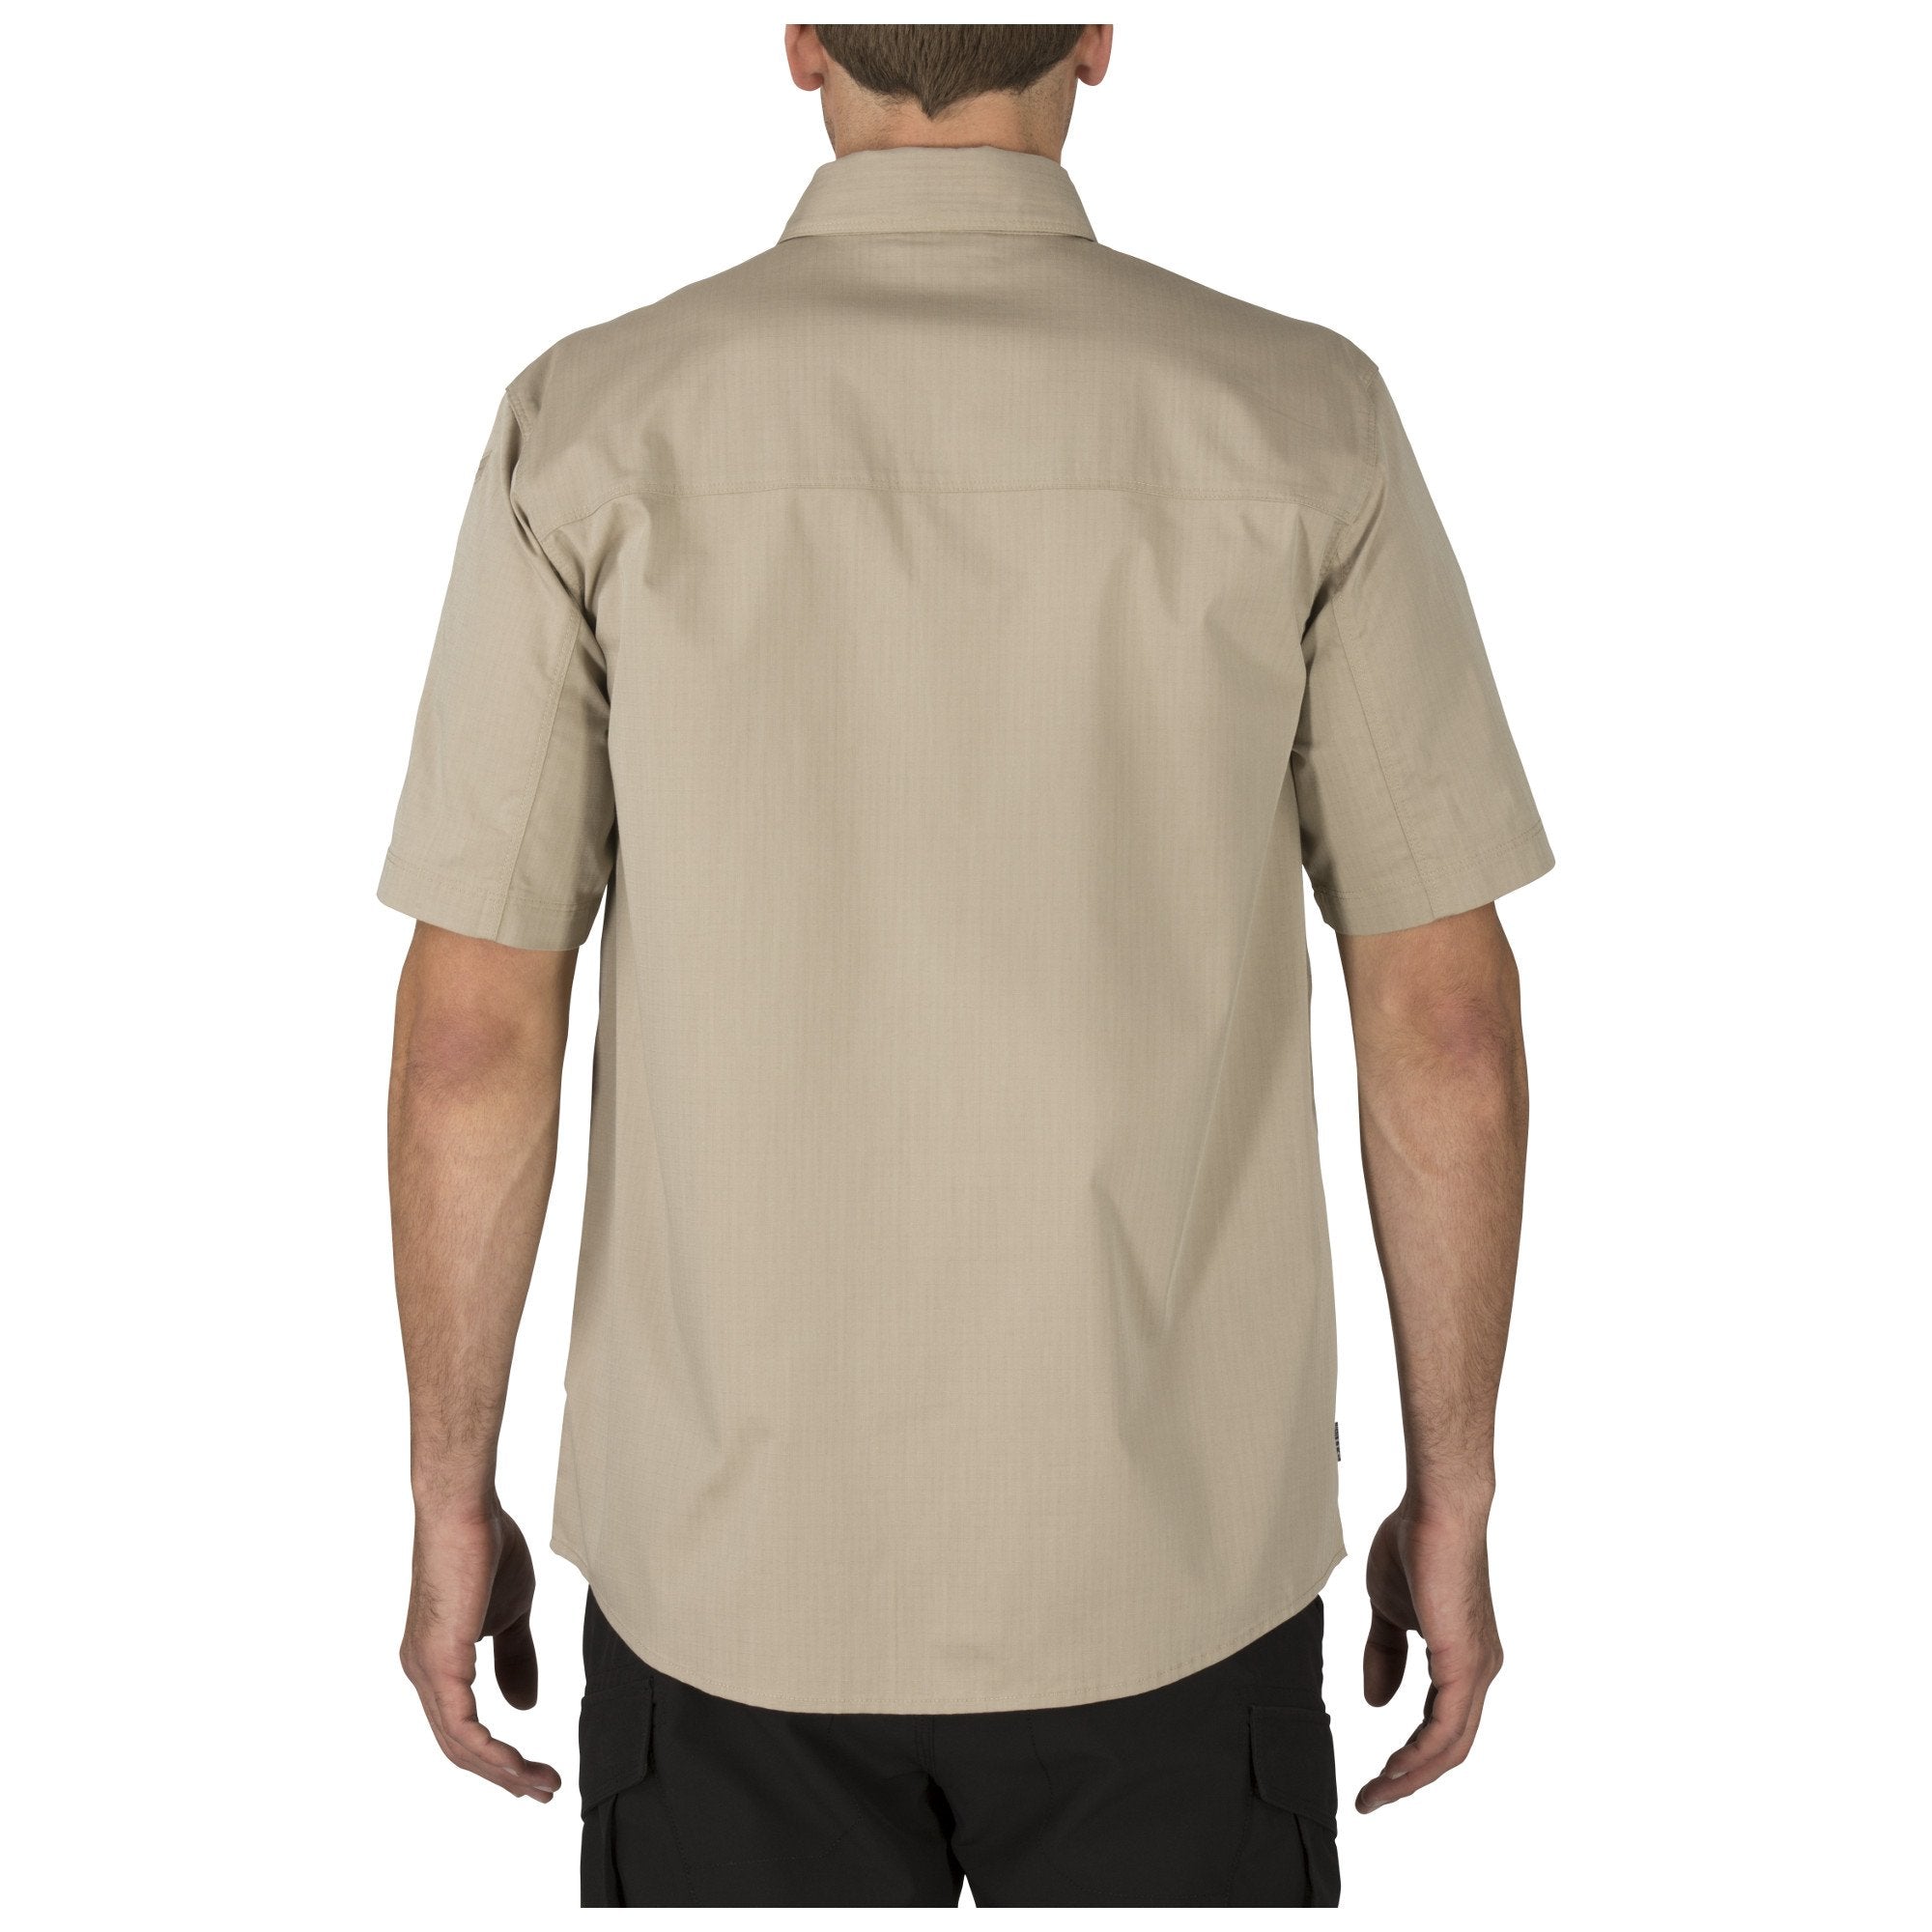 5.11 Tactical Stryke Short Sleeve Shirts Khaki Shirts 5.11 Tactical Small Tactical Gear Supplier Tactical Distributors Australia